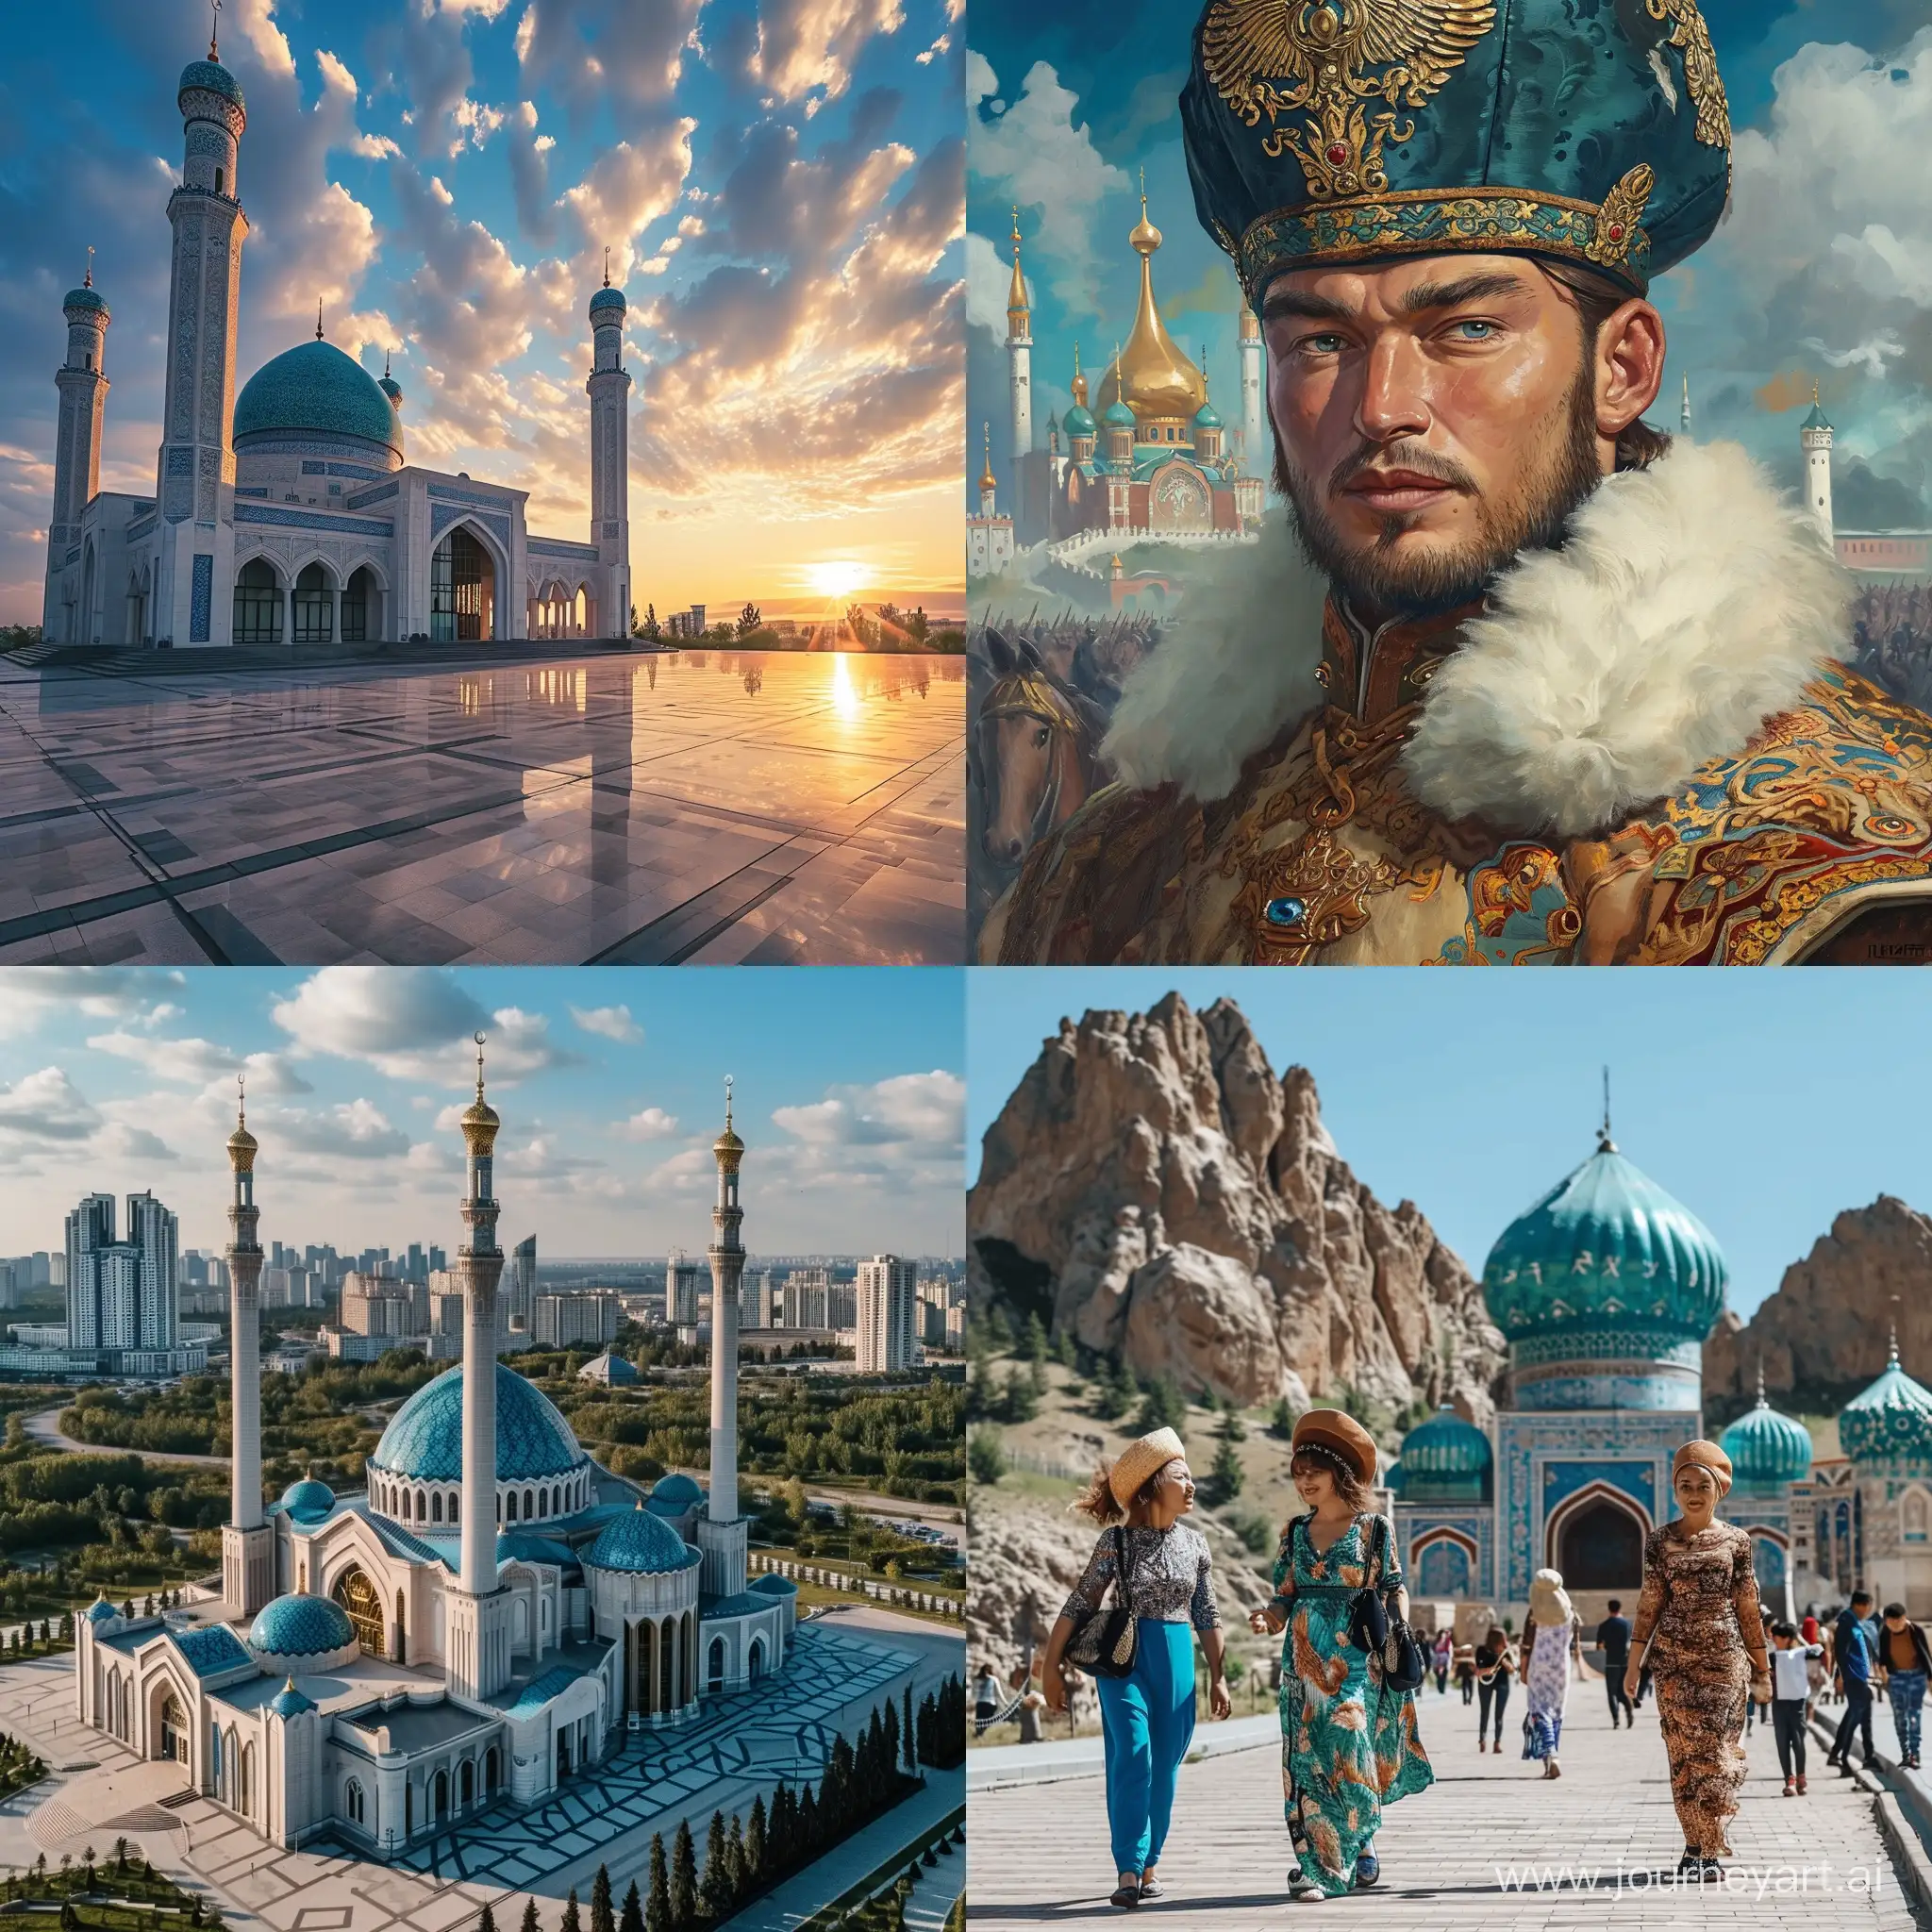 Kazakh-Cultural-Exploration-Vibrant-World-Opening